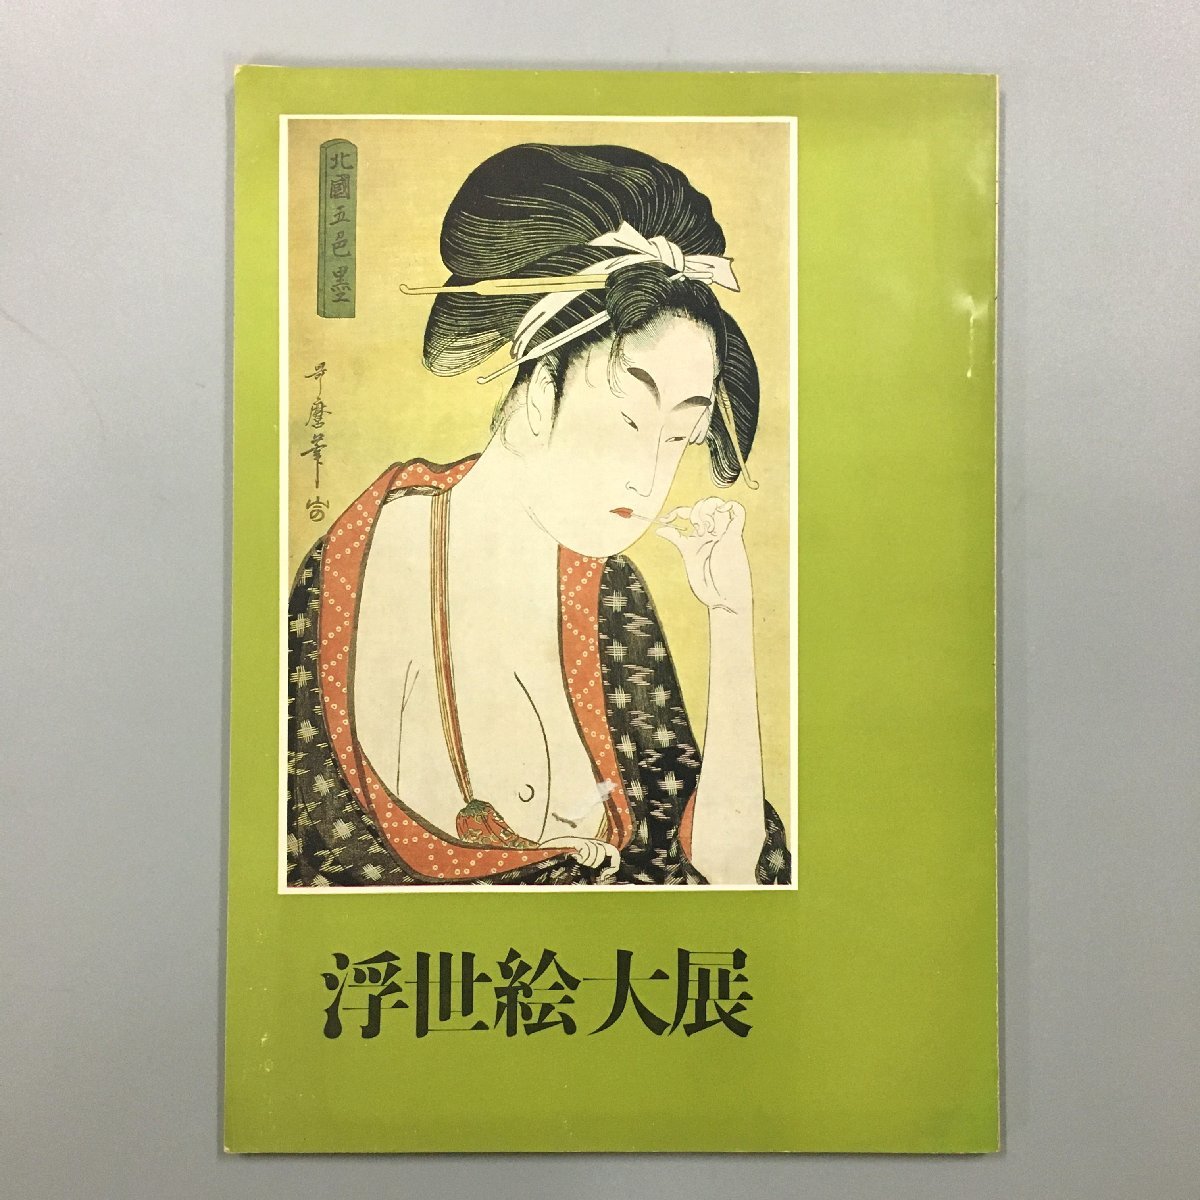 उकियो-ई महान प्रदर्शनी की सूची निकाइदो उकियो-ई लाइब्रेरी, 1969 सूची, चित्रकारी, कला पुस्तक, संग्रह, सूची